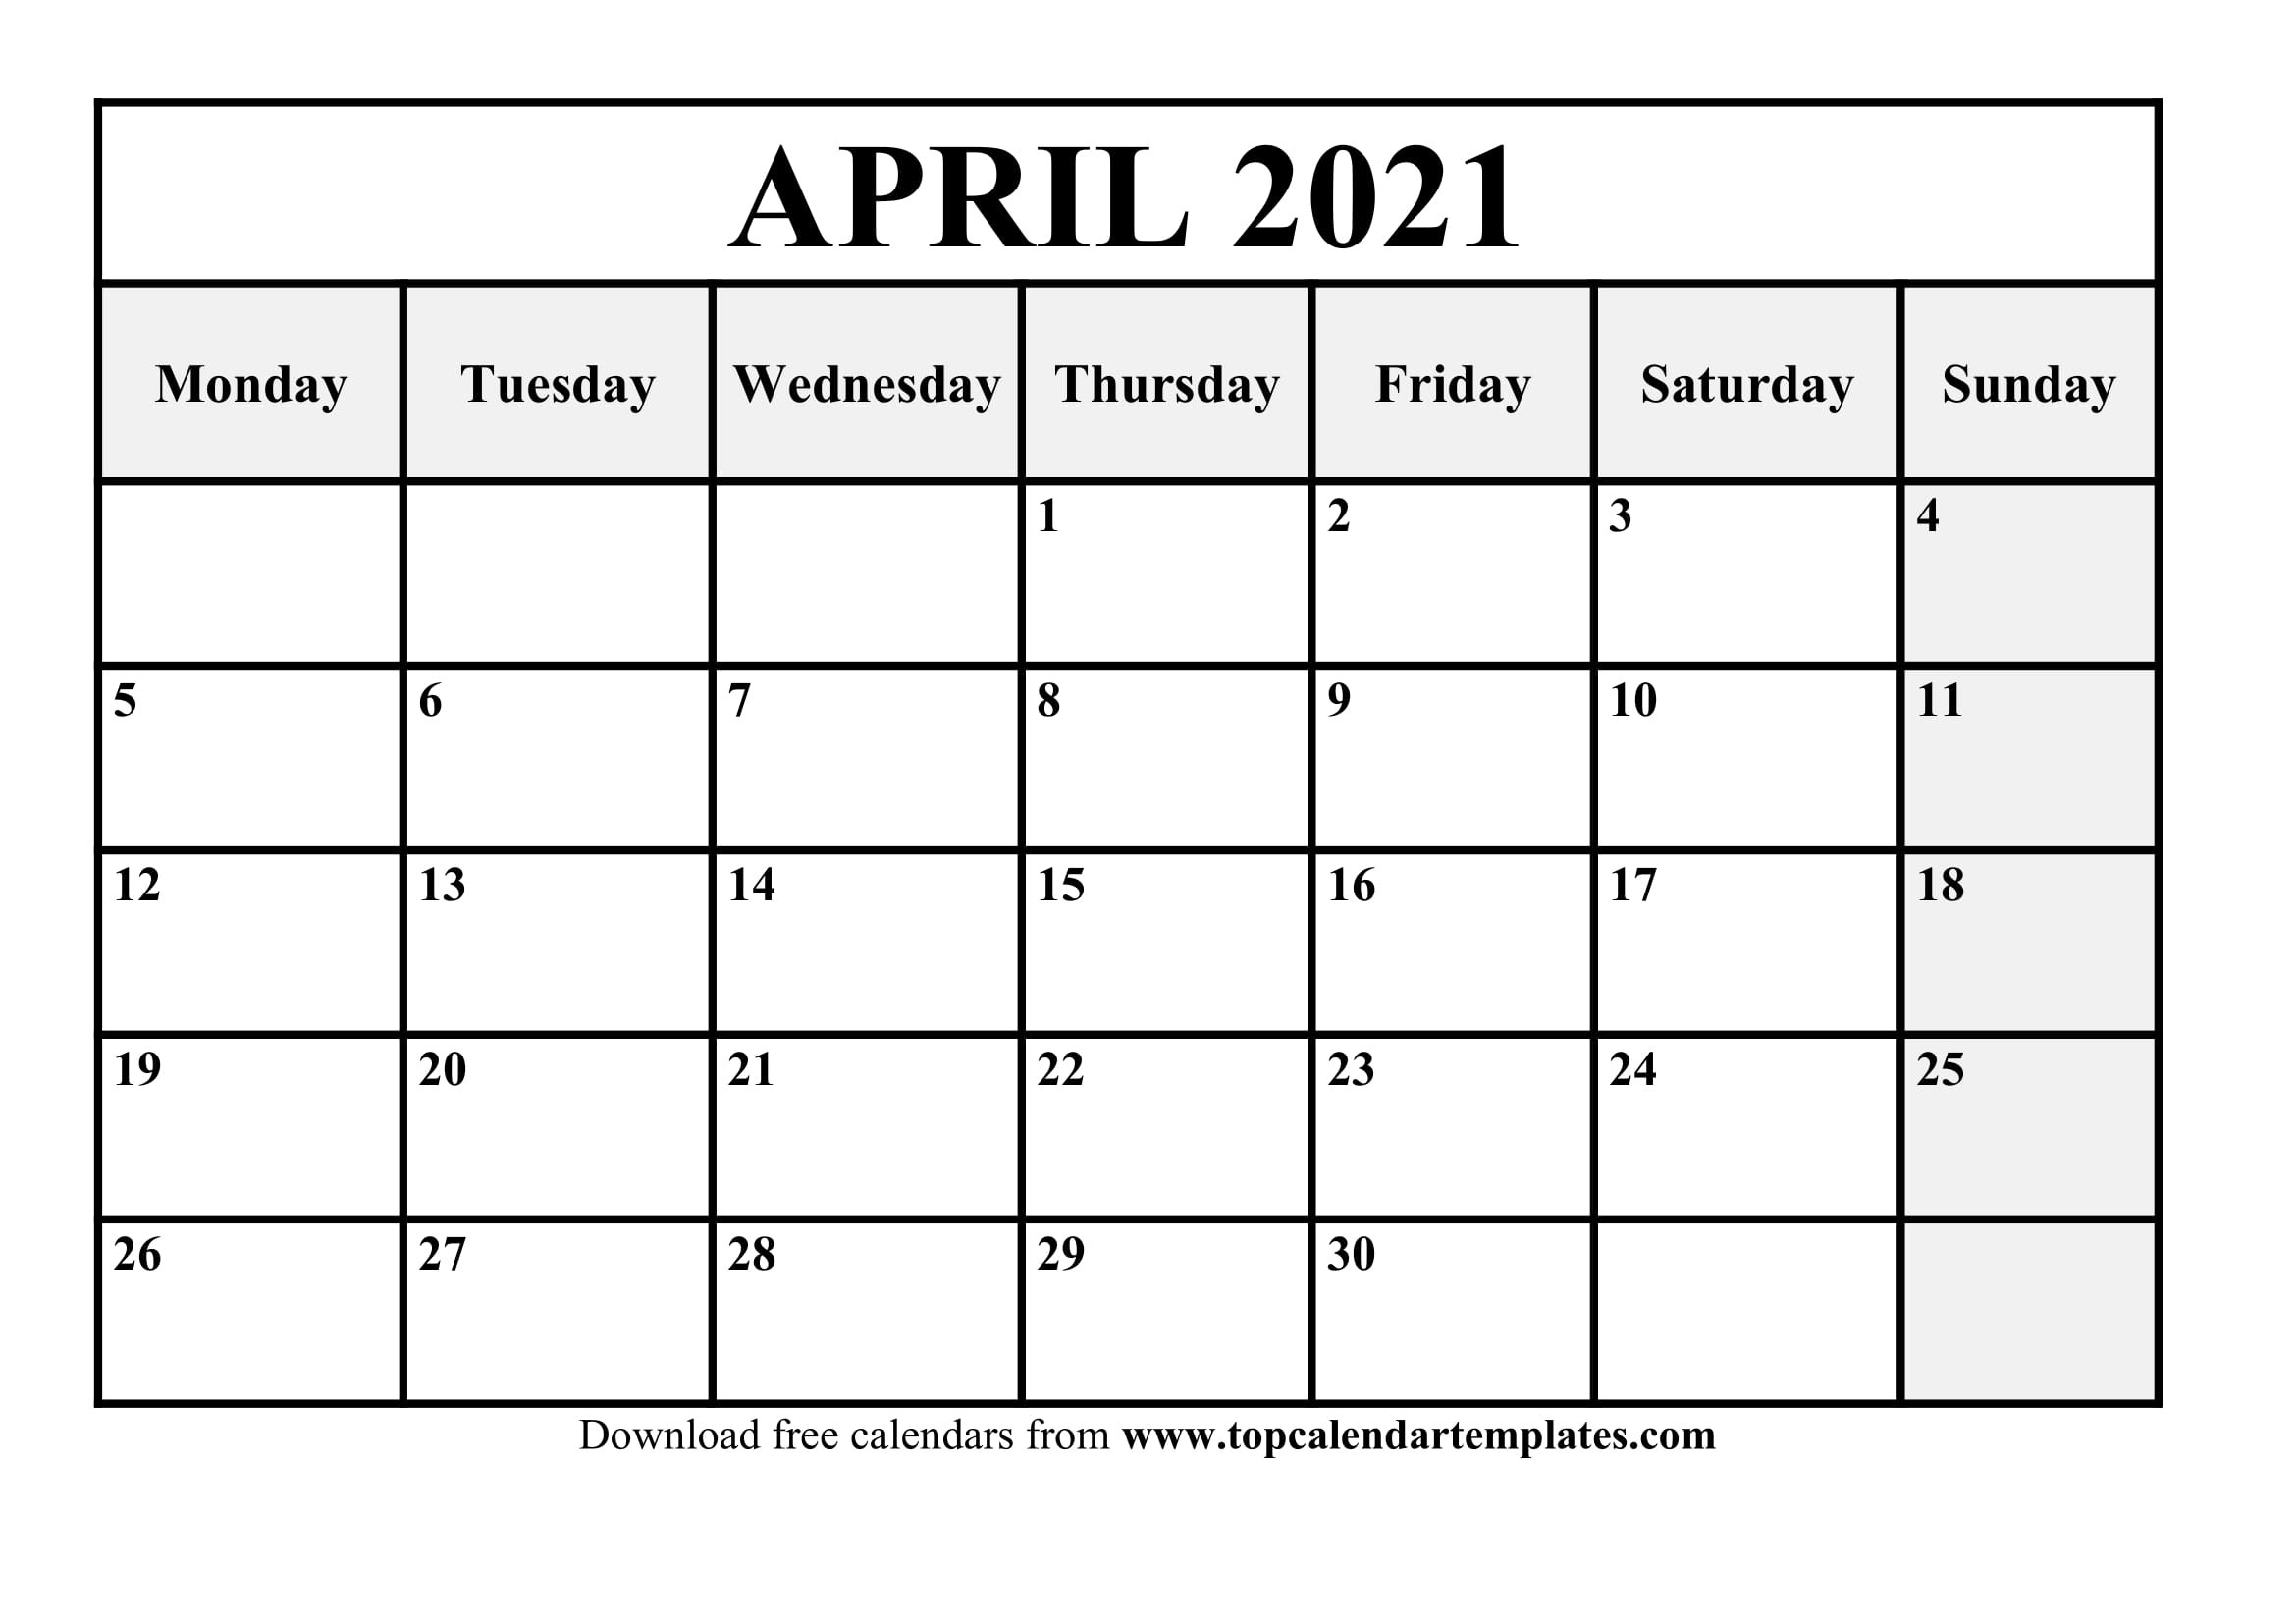 Free April 2021 Printable Calendar In Editable Format-2021 Free Printable Absentee Calendars